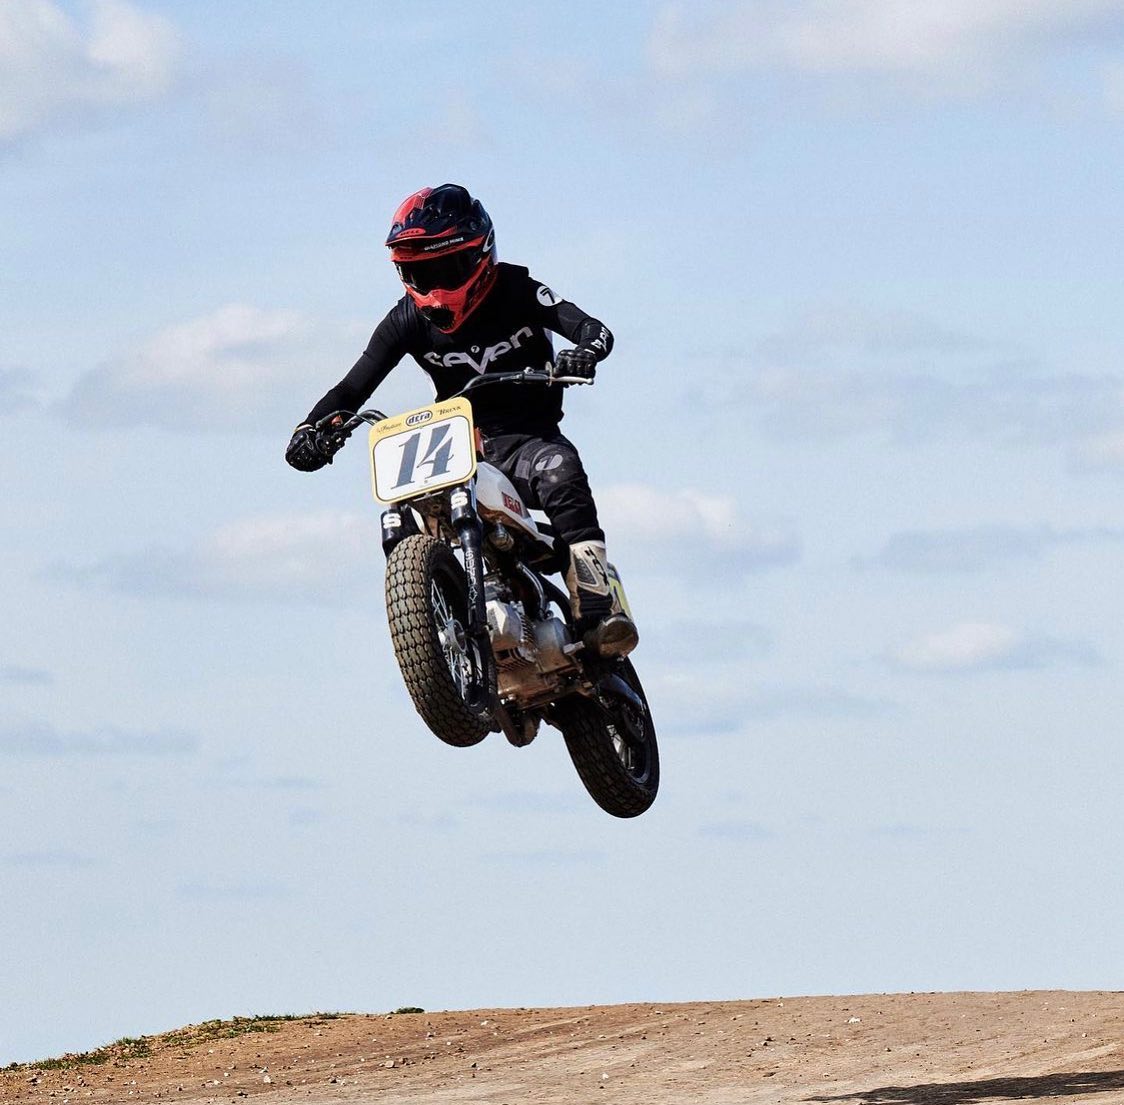 @max.inman flying with his SUNDAY. It's crazy !!
📸 @tonton_la_mitraille
—
#sundaymotors #flattrack #moto #ycf #motorcycle